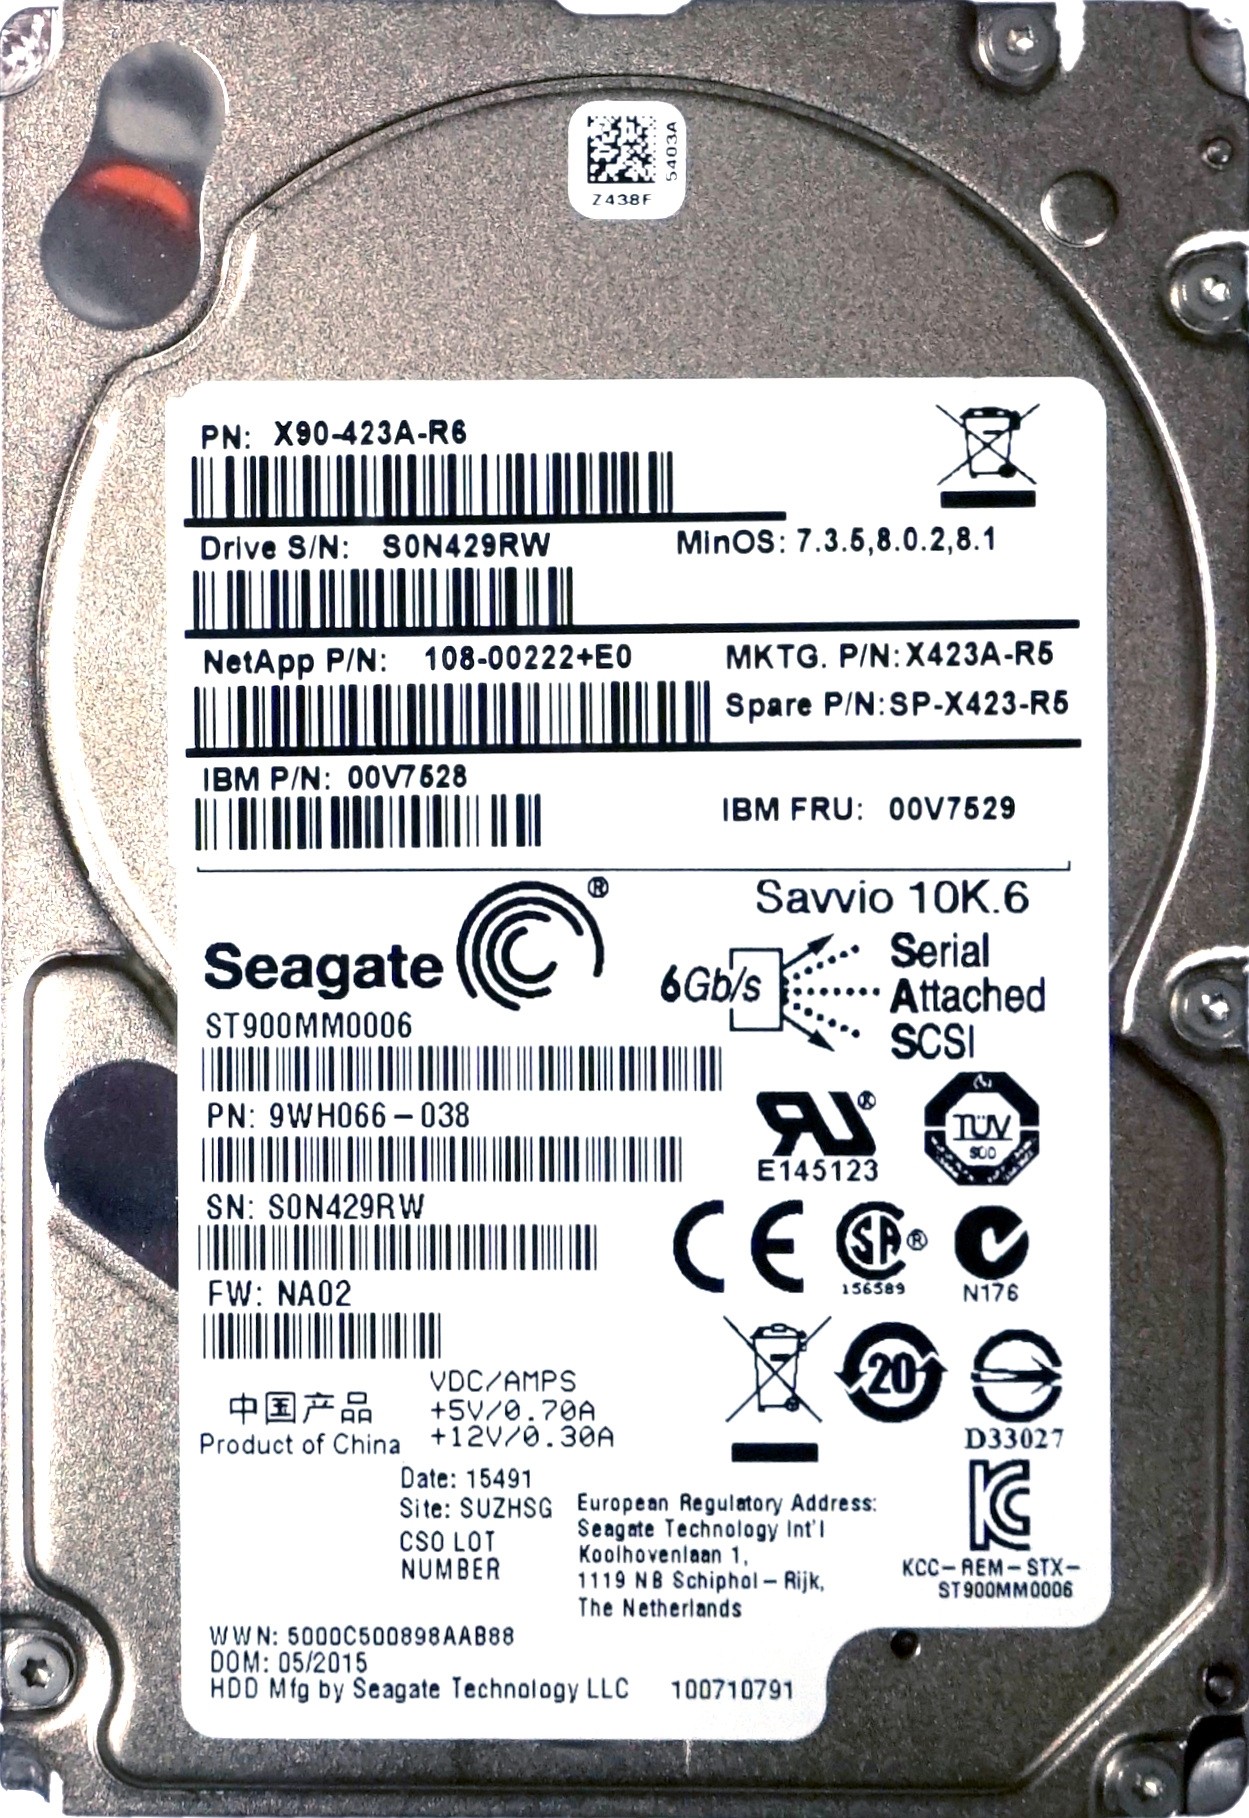 Seagate (ST900MM0006) 900GB SAS-2 (2.5") 6Gb/s 10K HDD